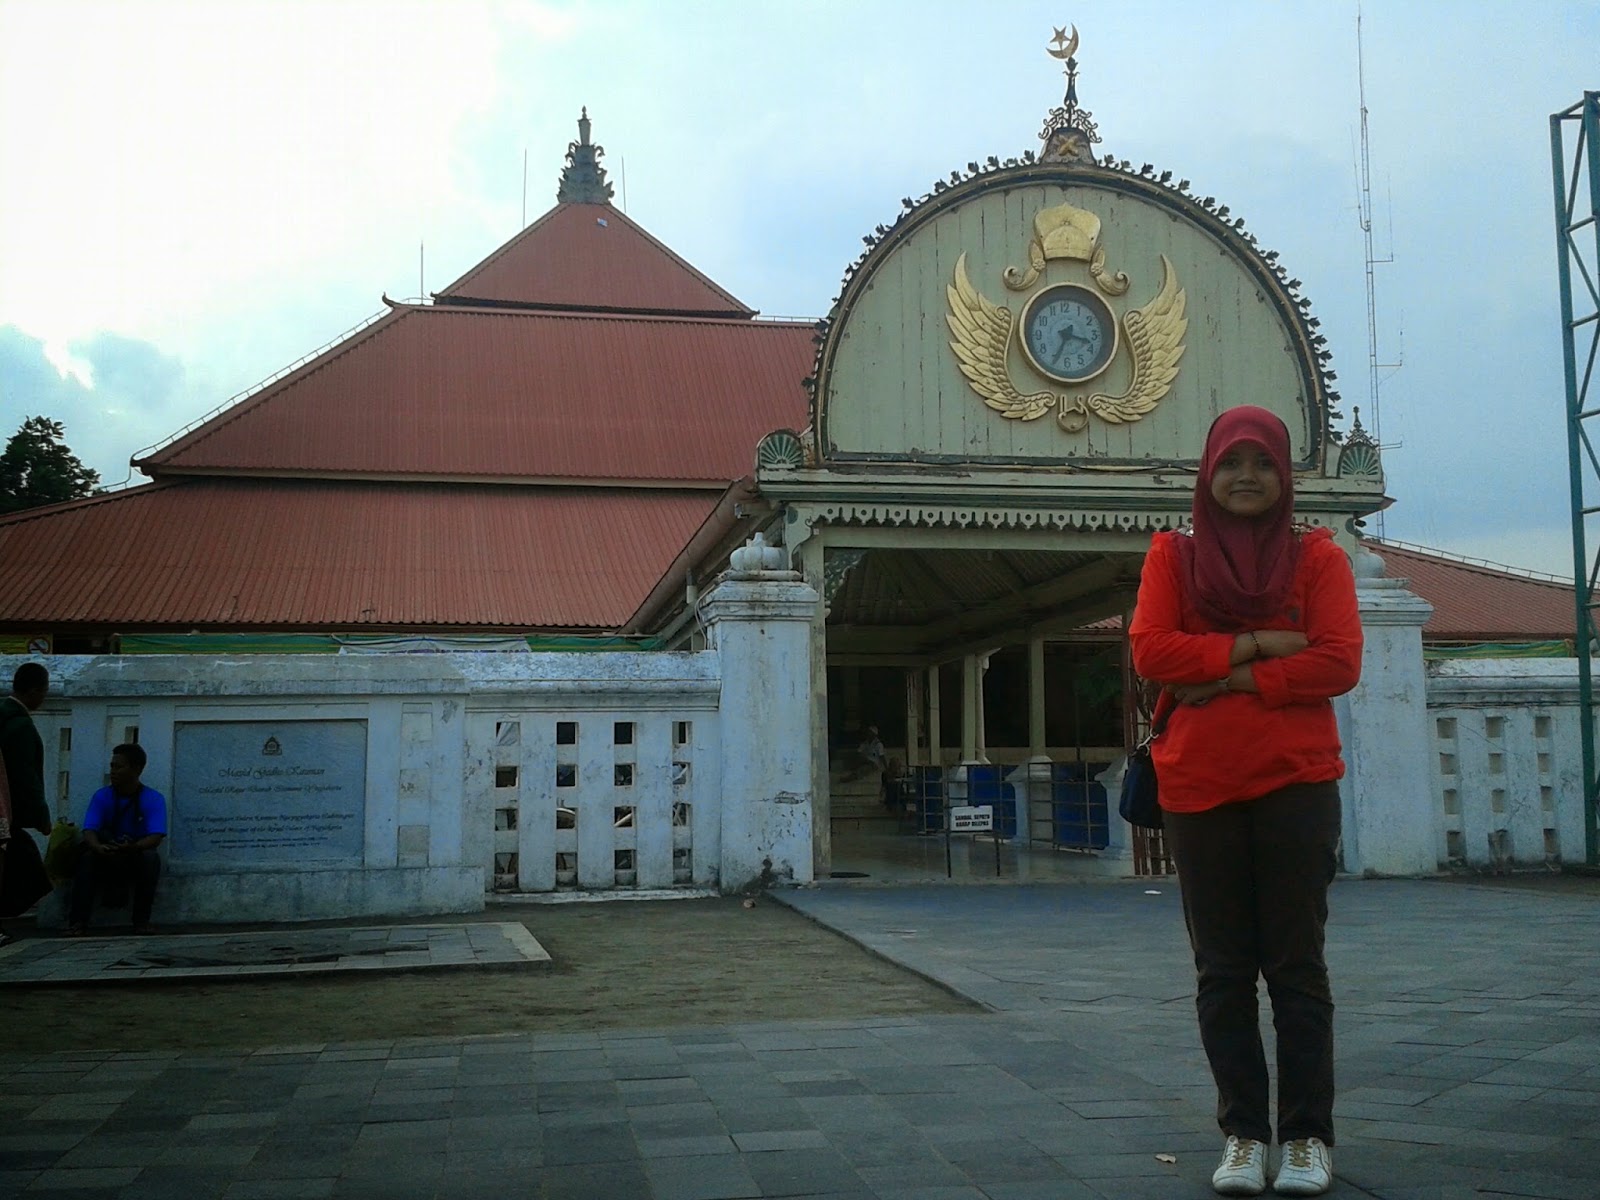 Di depan Masjid Agung Kauman, Yogyakarta